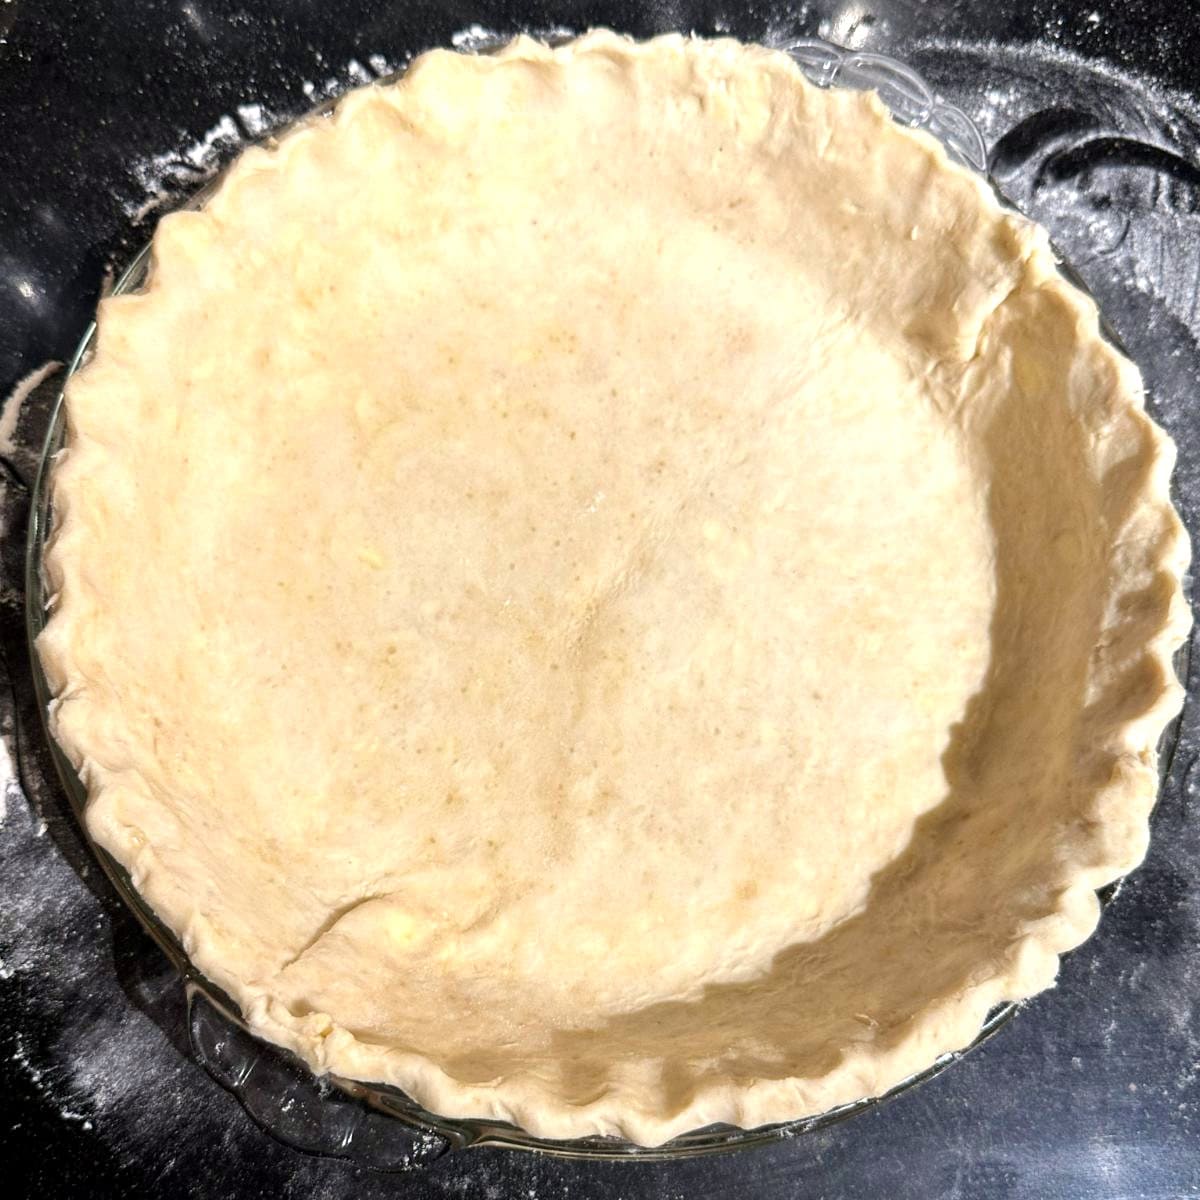 Bottom crust of vegan apple pie in pie plate.